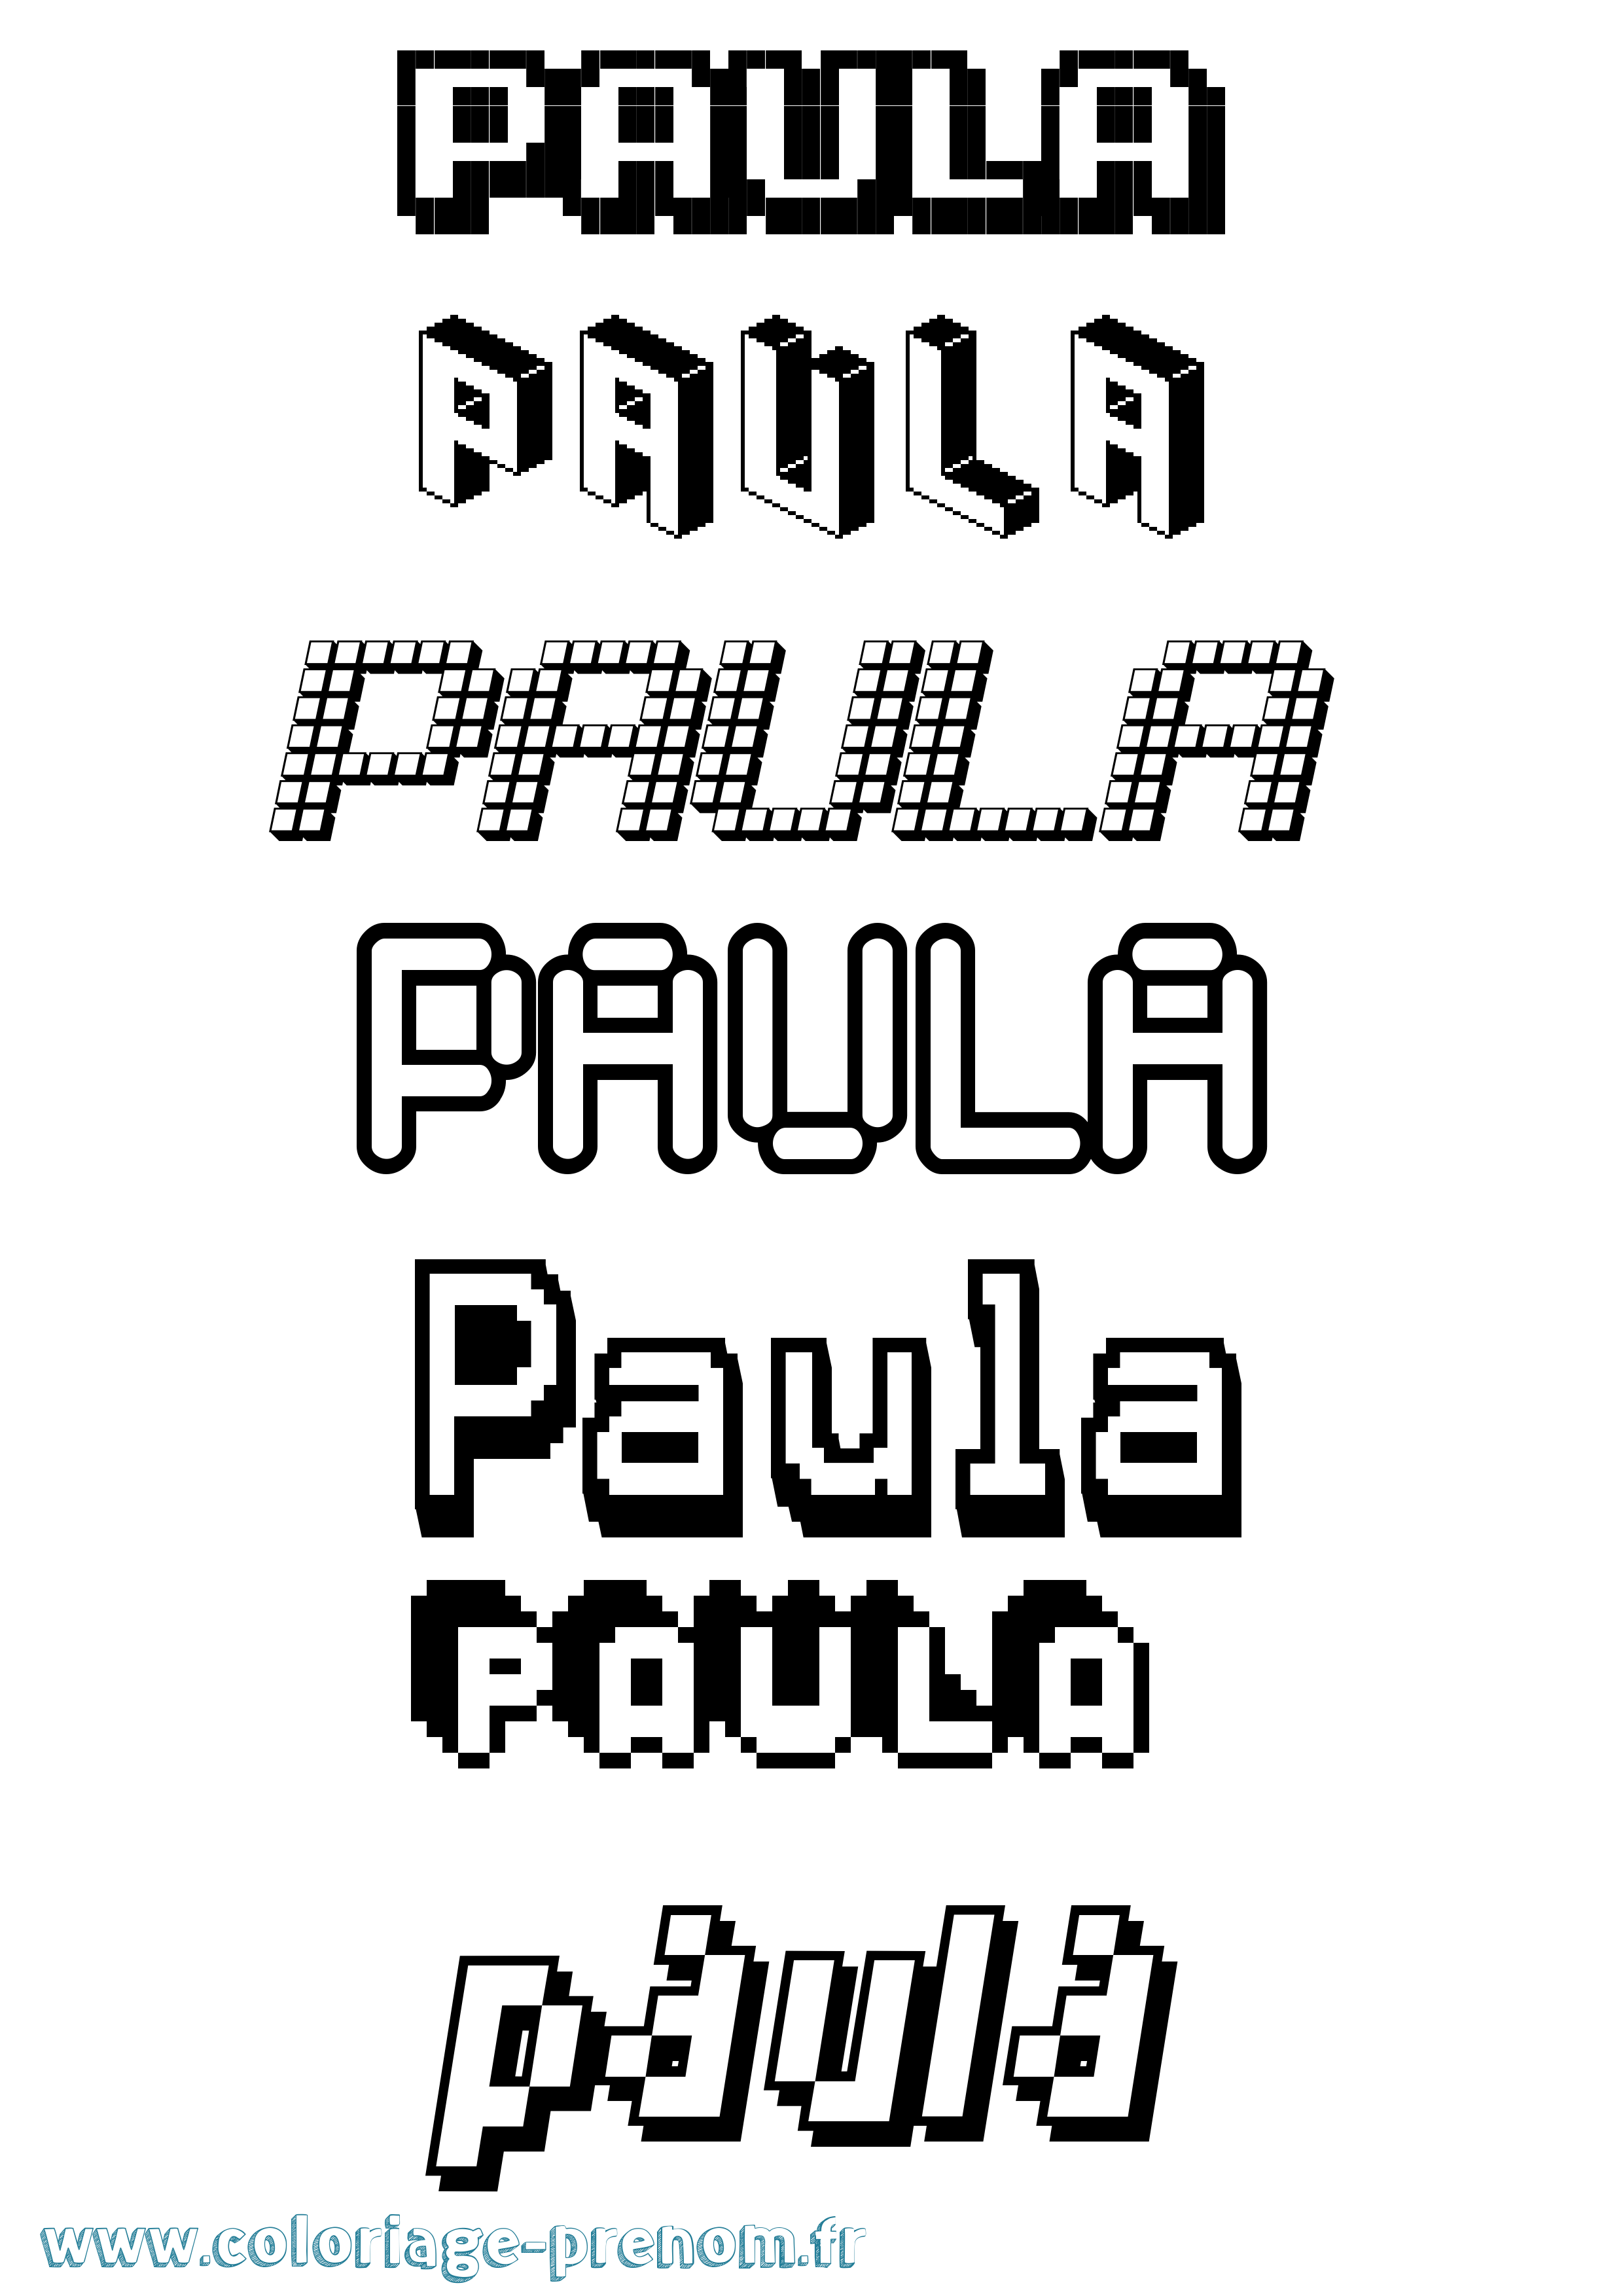 Coloriage prénom Paula Pixel